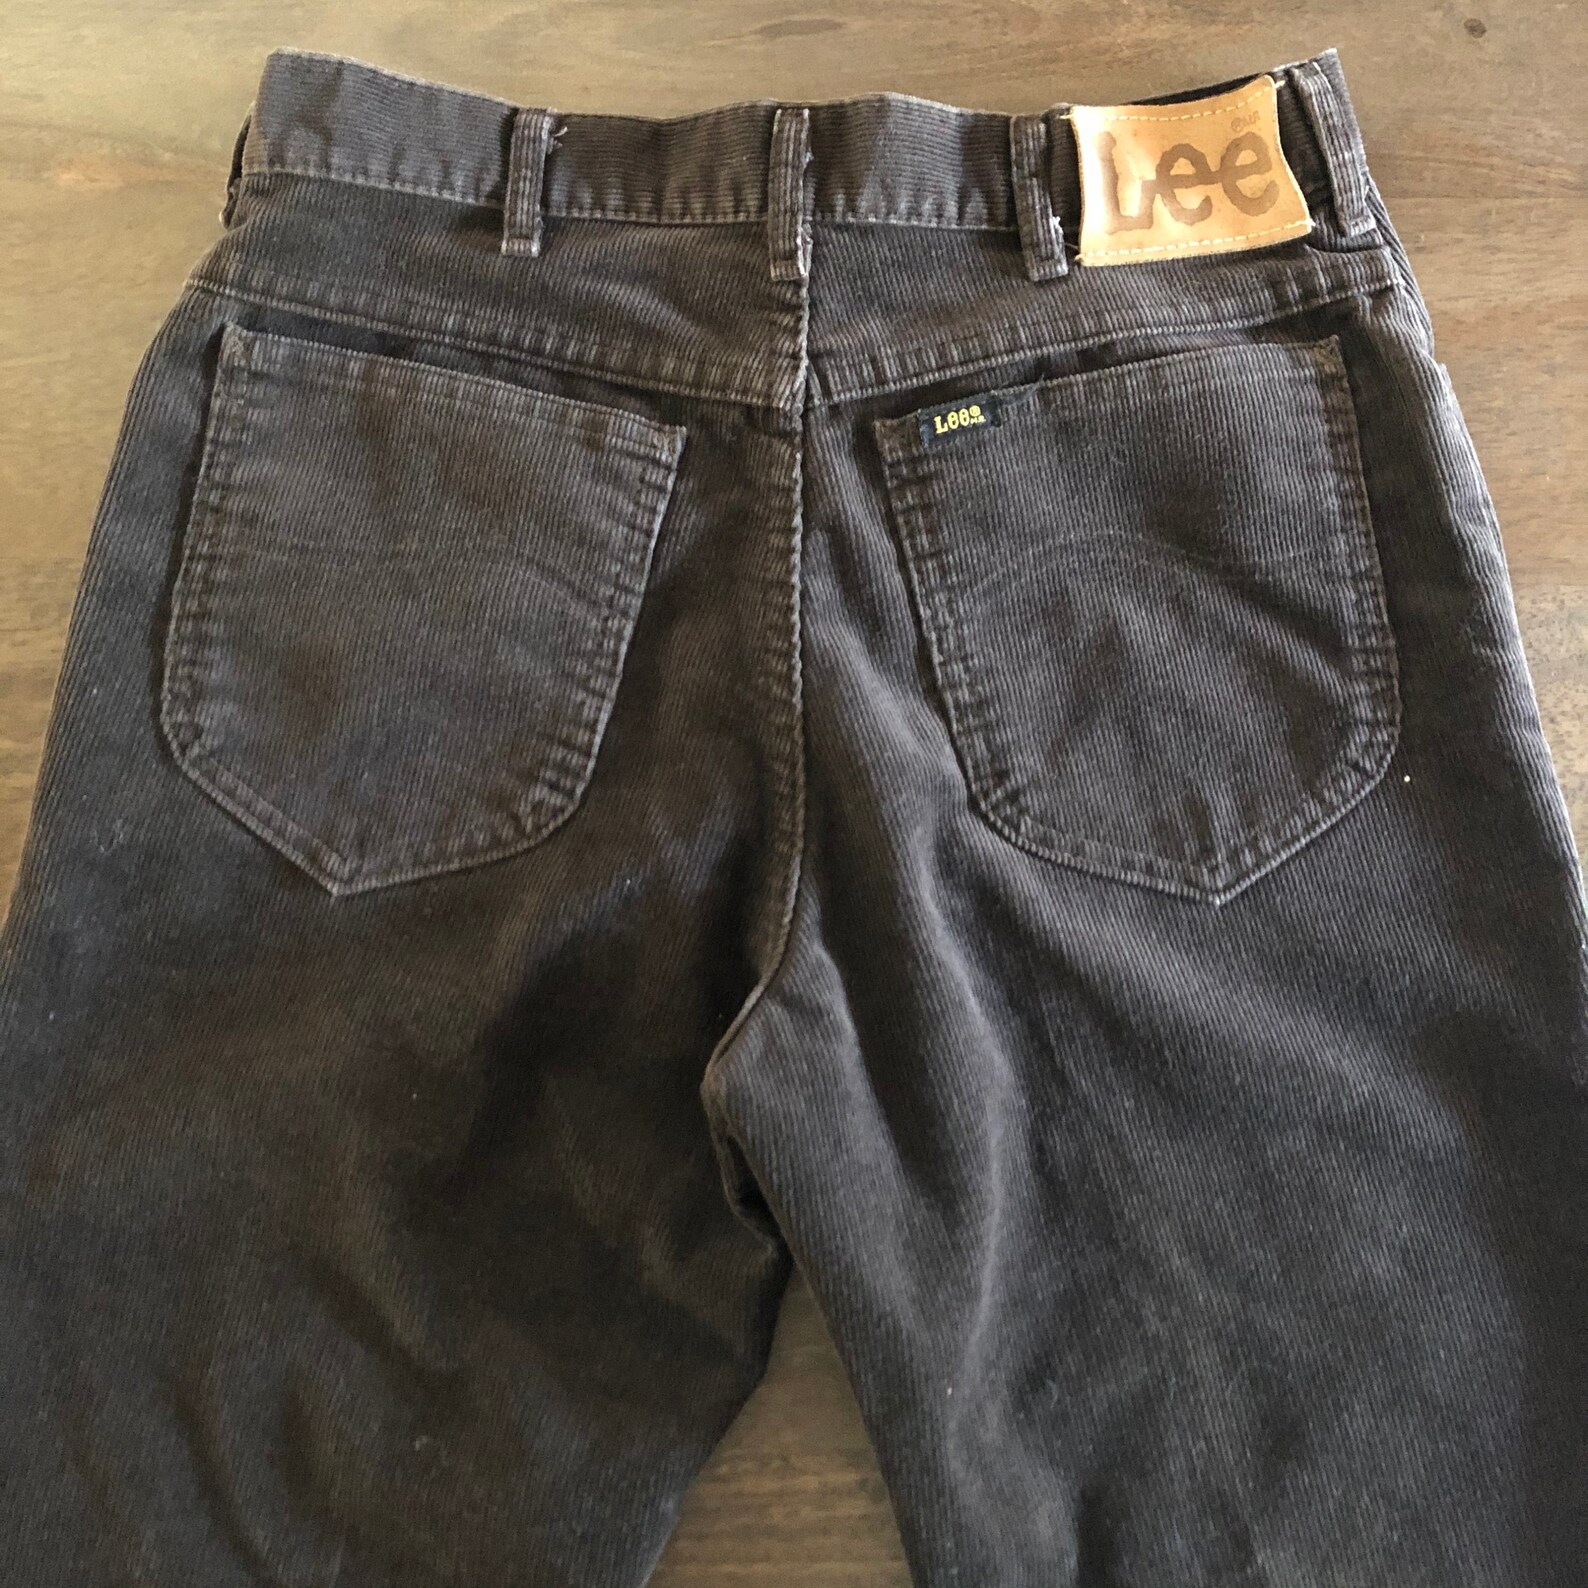 Vintage 1980s Lee Brown Corduroy Jeans Size 32 | Etsy